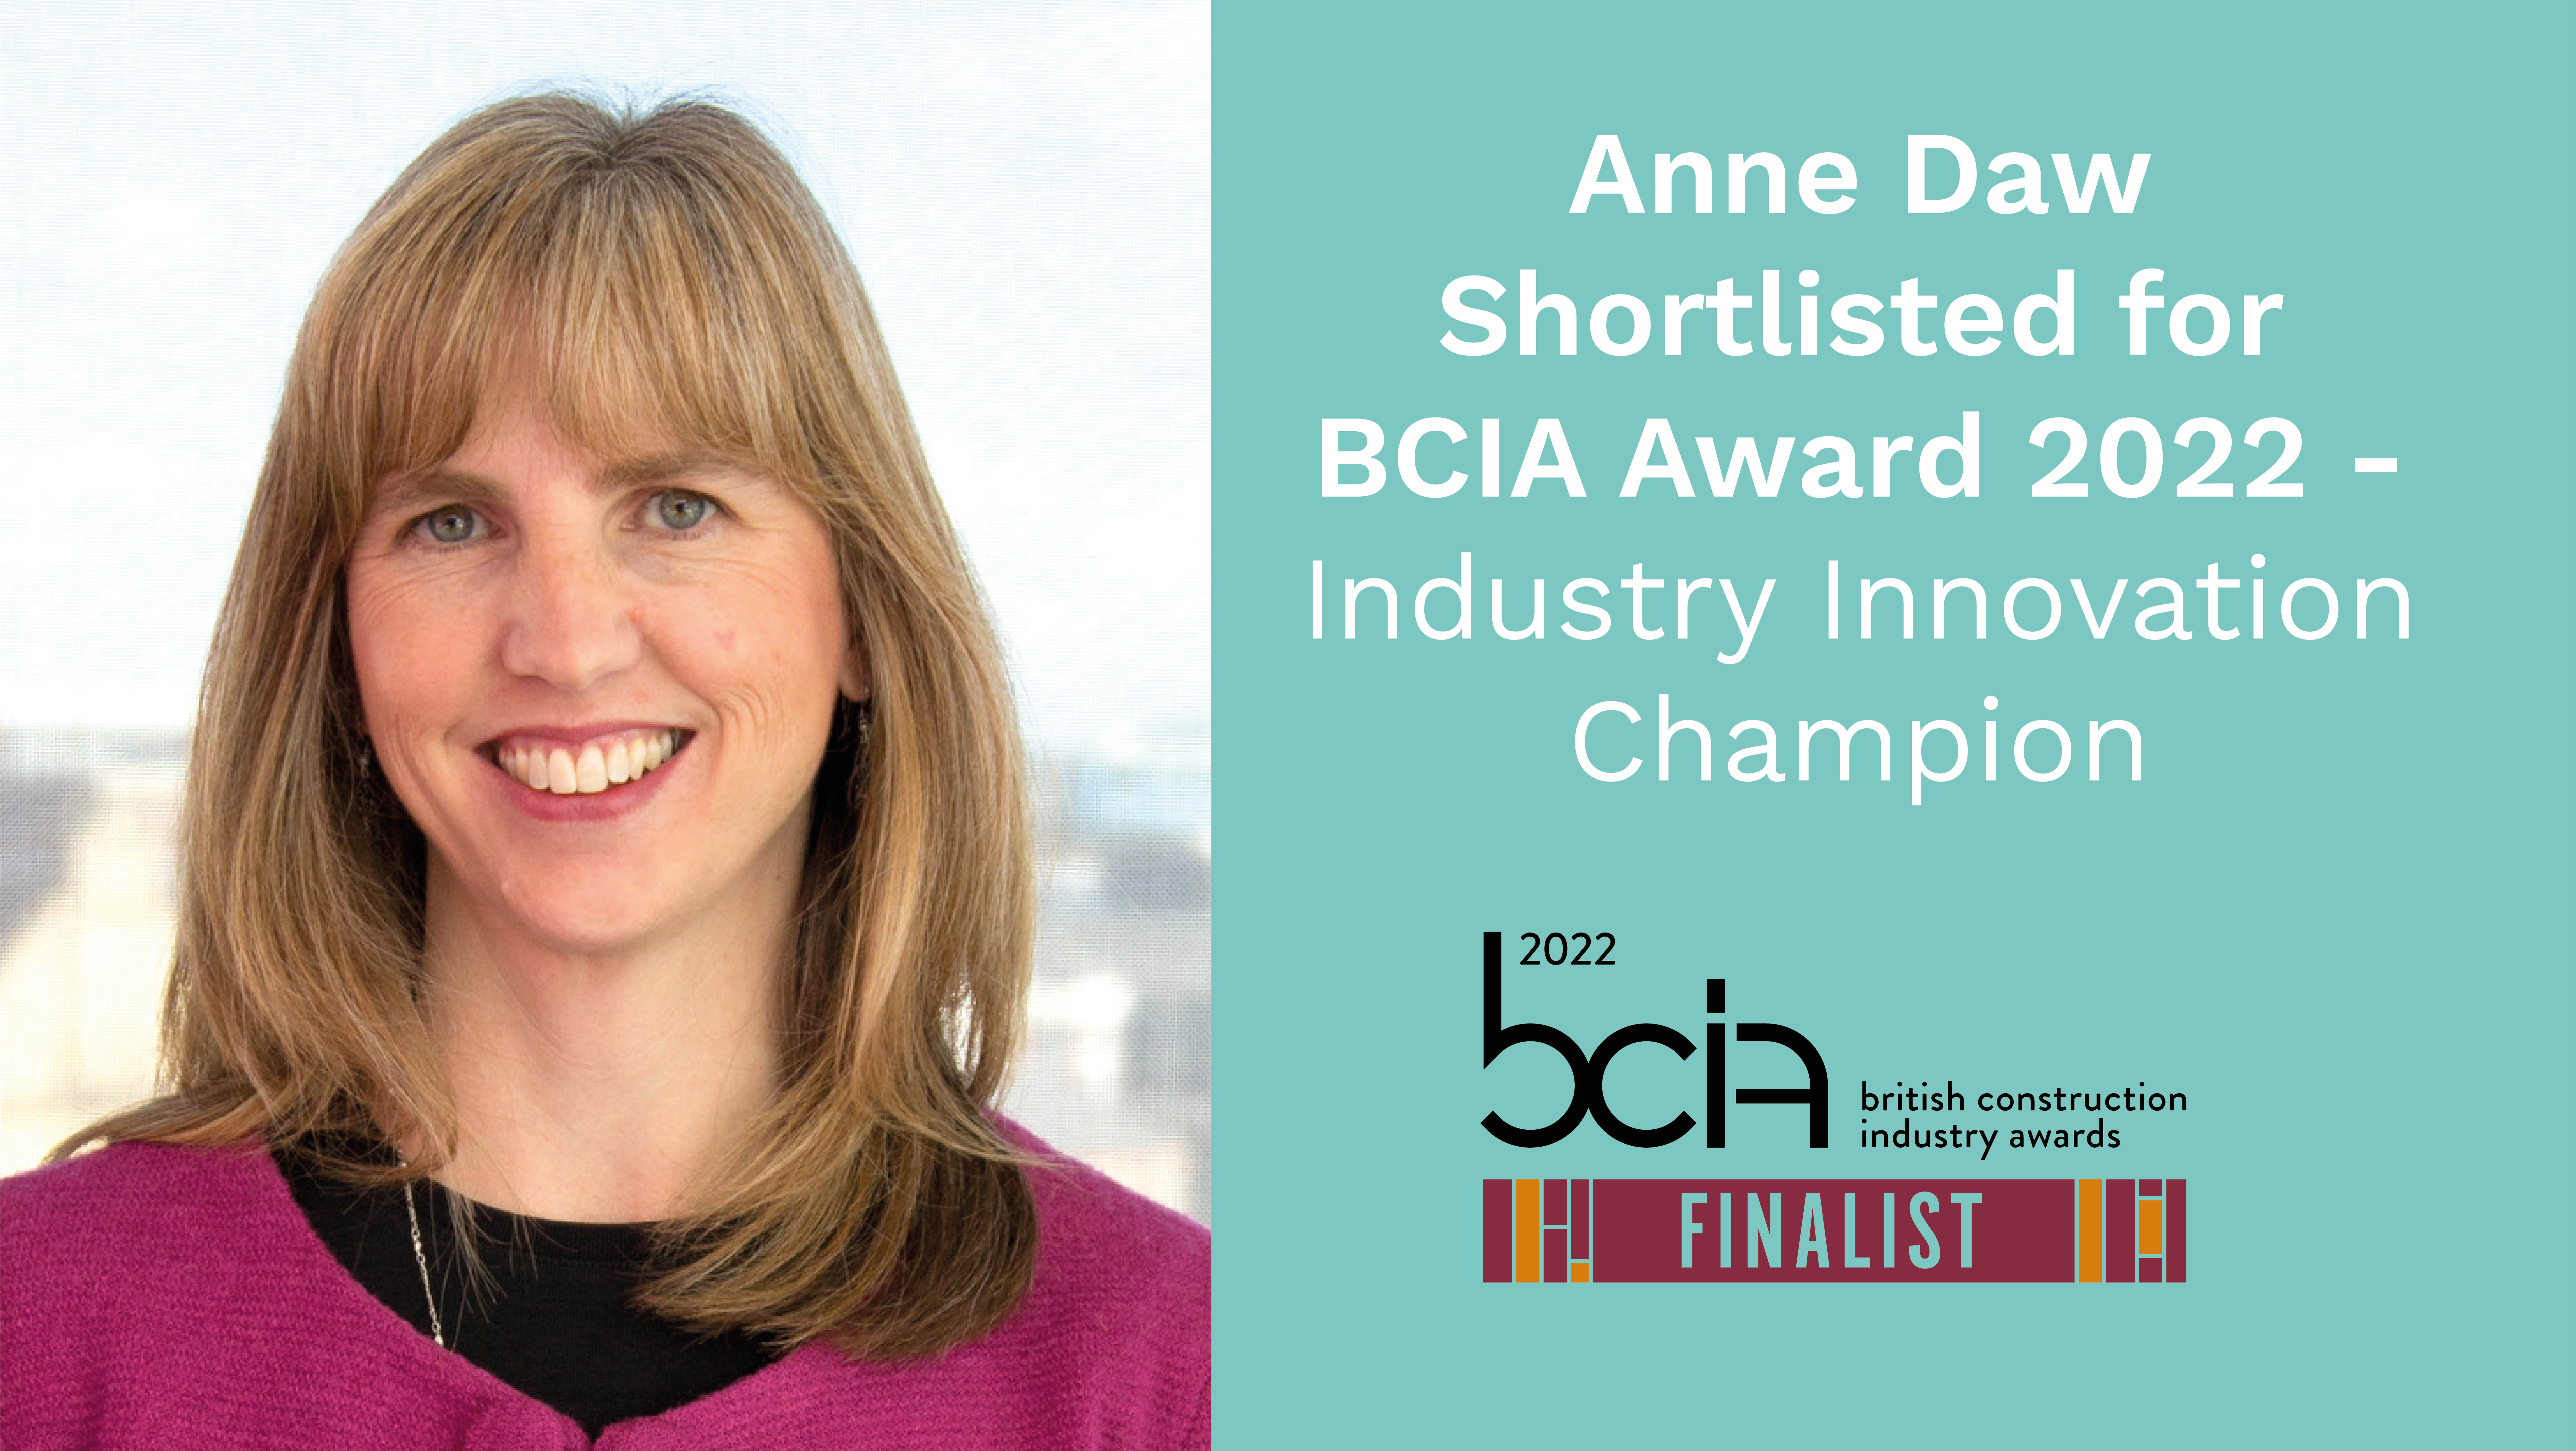 HLM Architect's Anne Daw Shortlisted for a BCIA Award